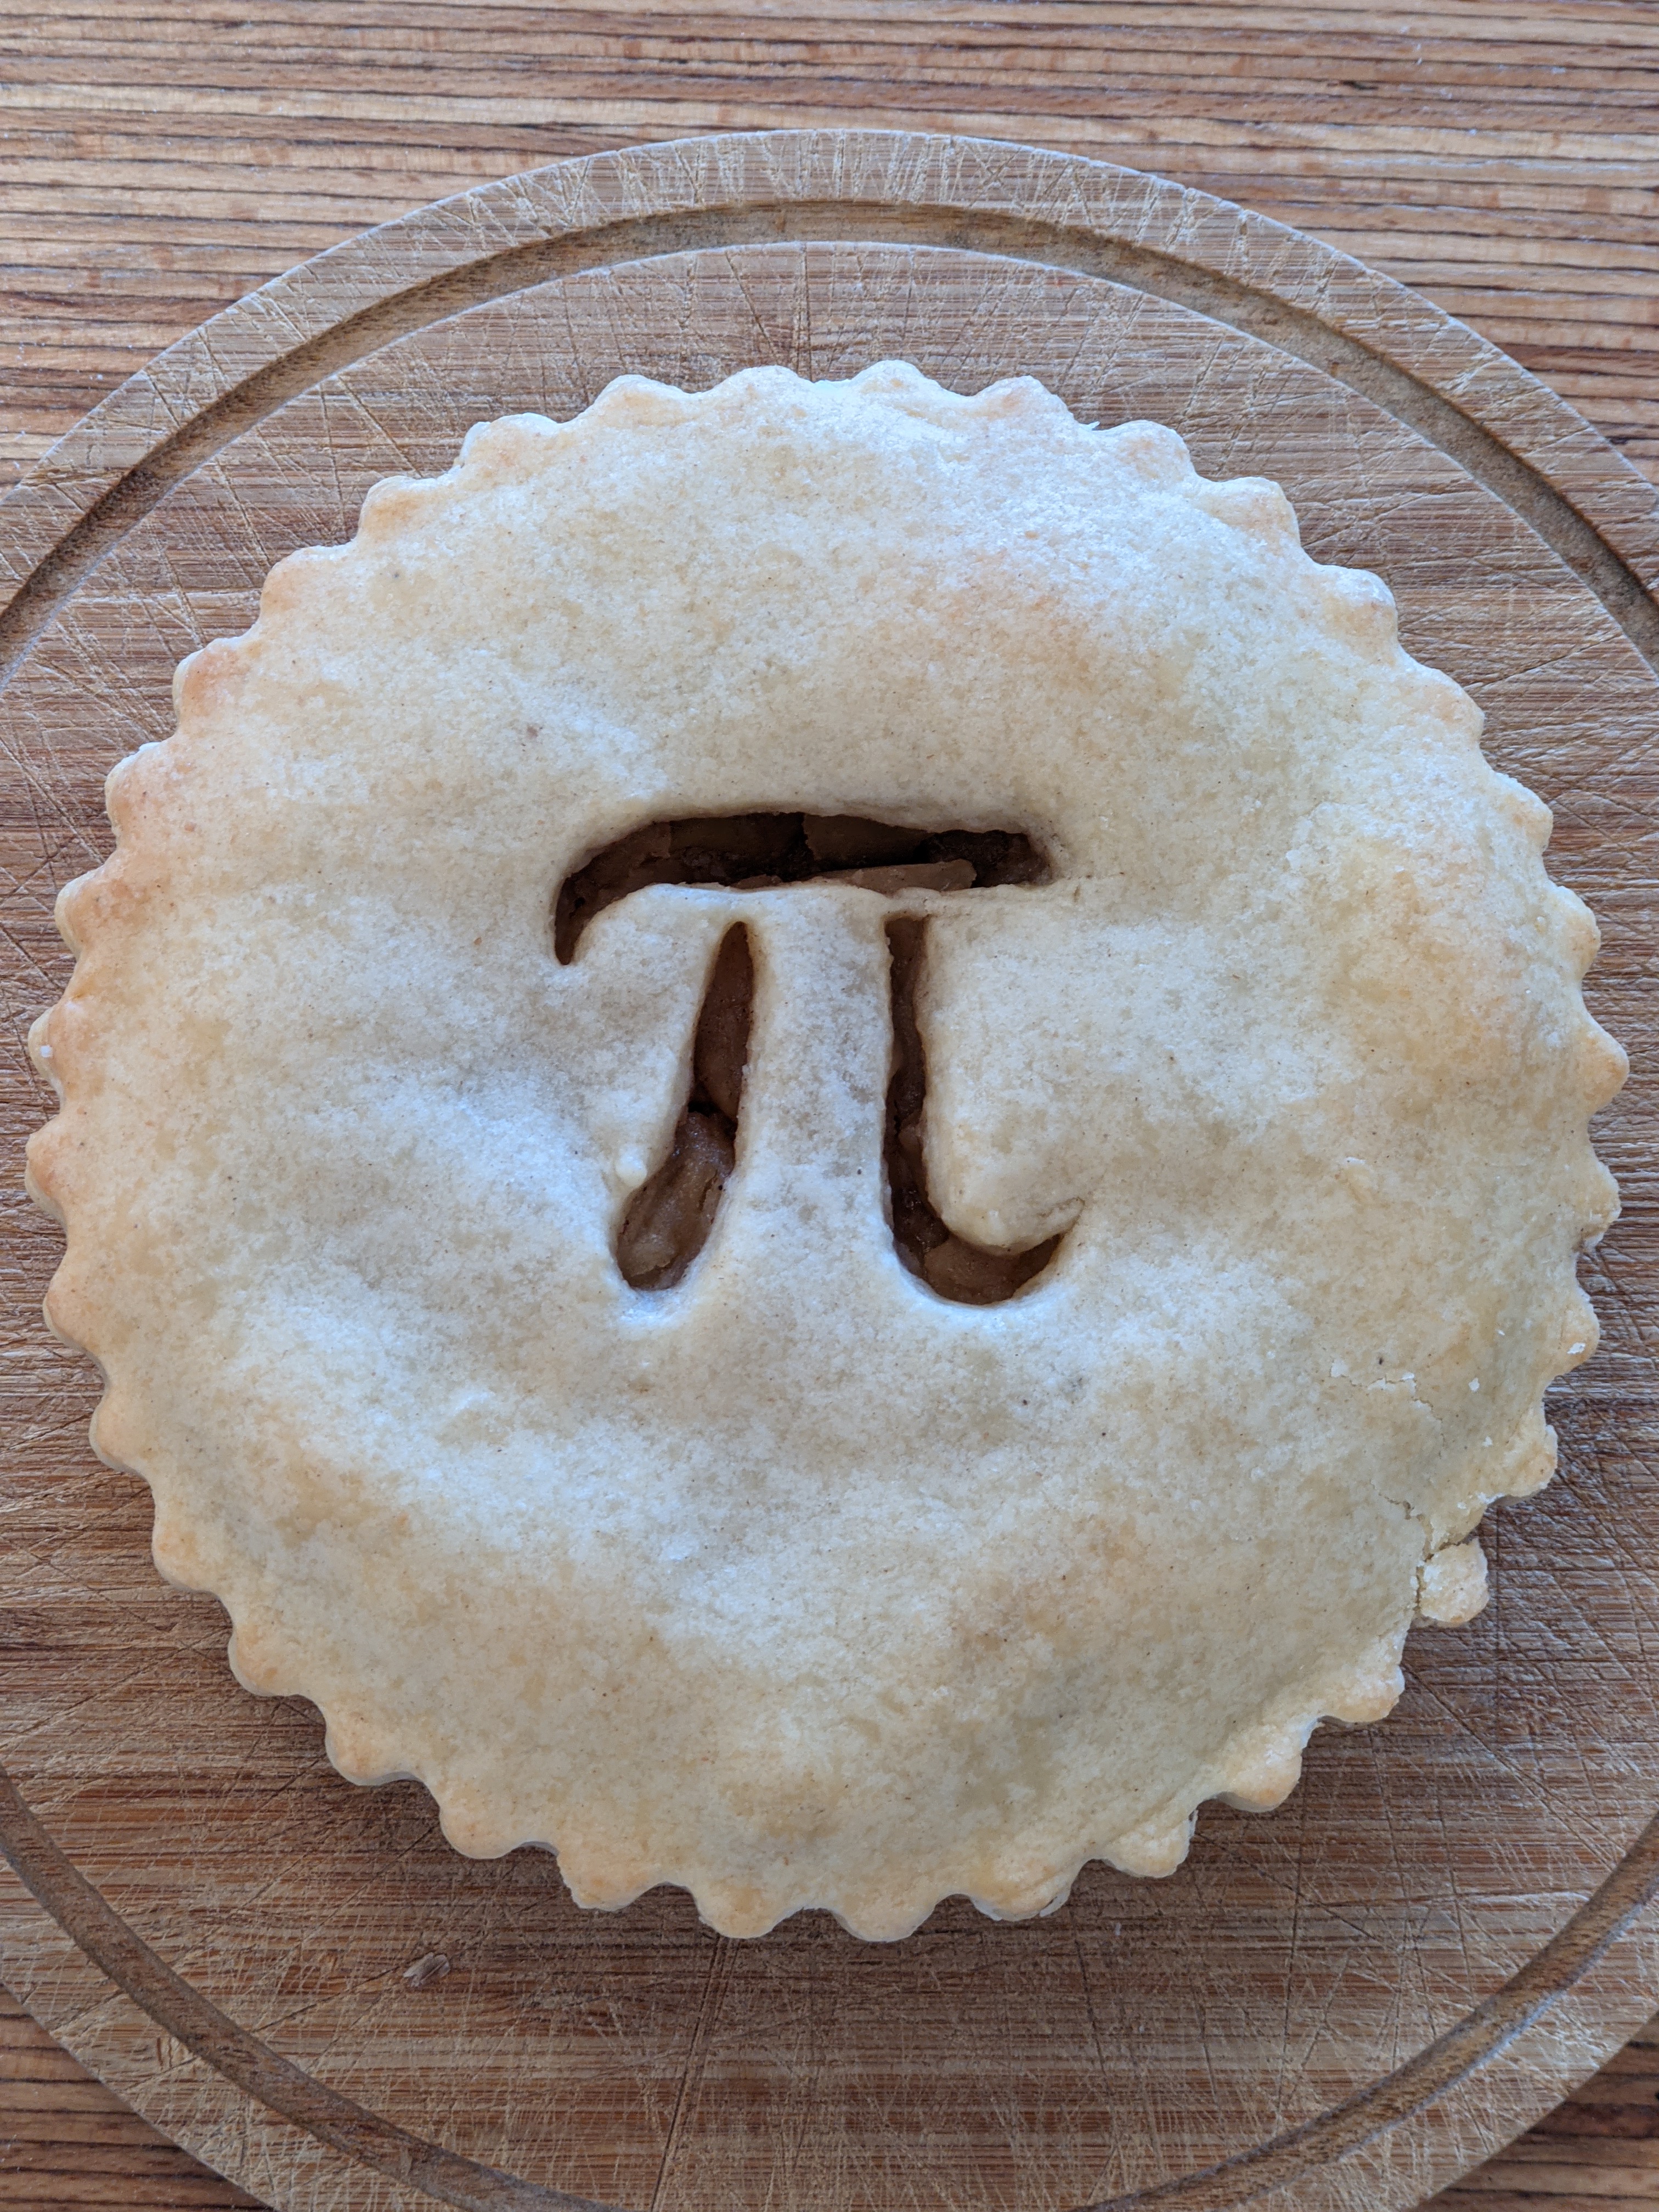 Pie with the pi symbol